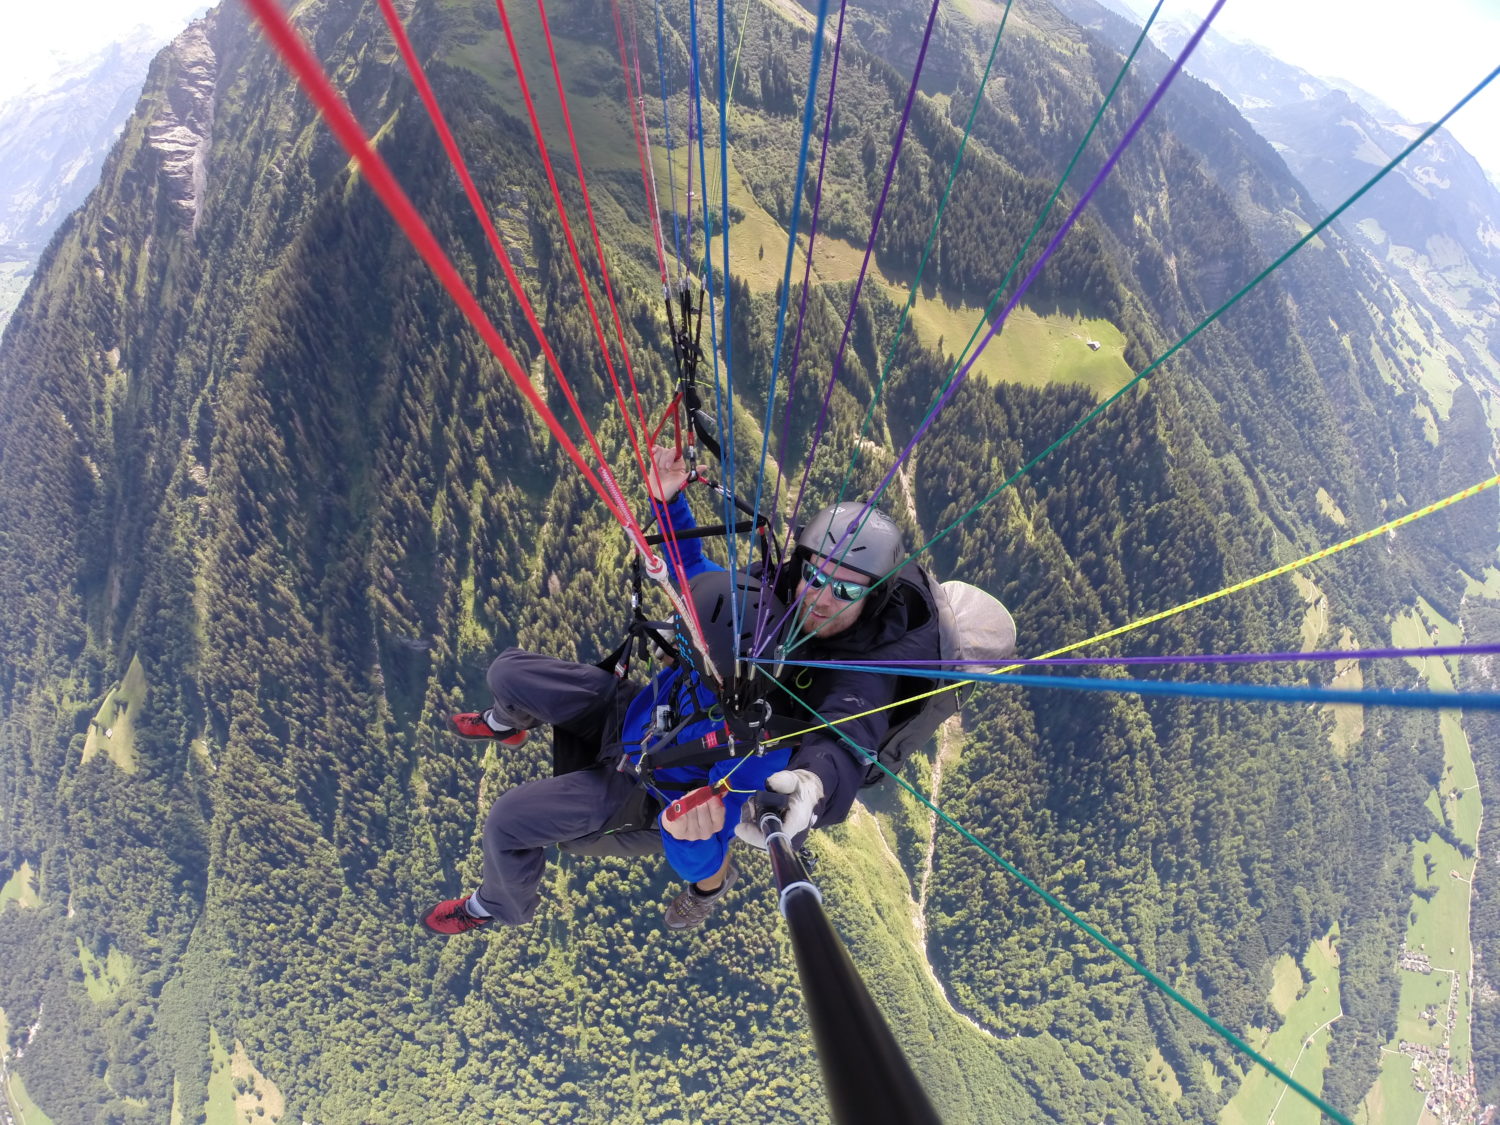 Swissgliders Tandem Paragliding over Spiez